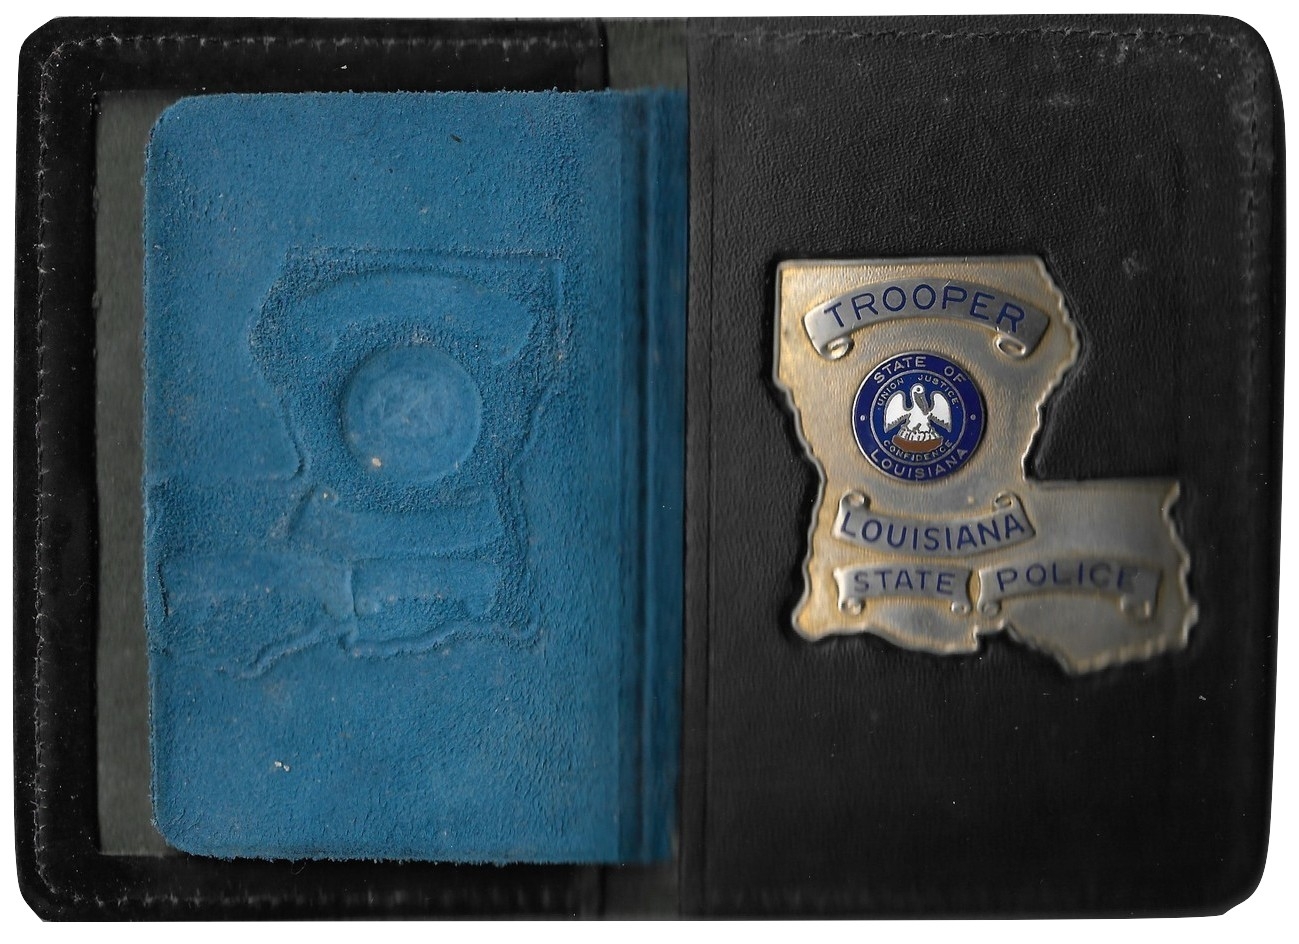 Louisiana State Police Badge